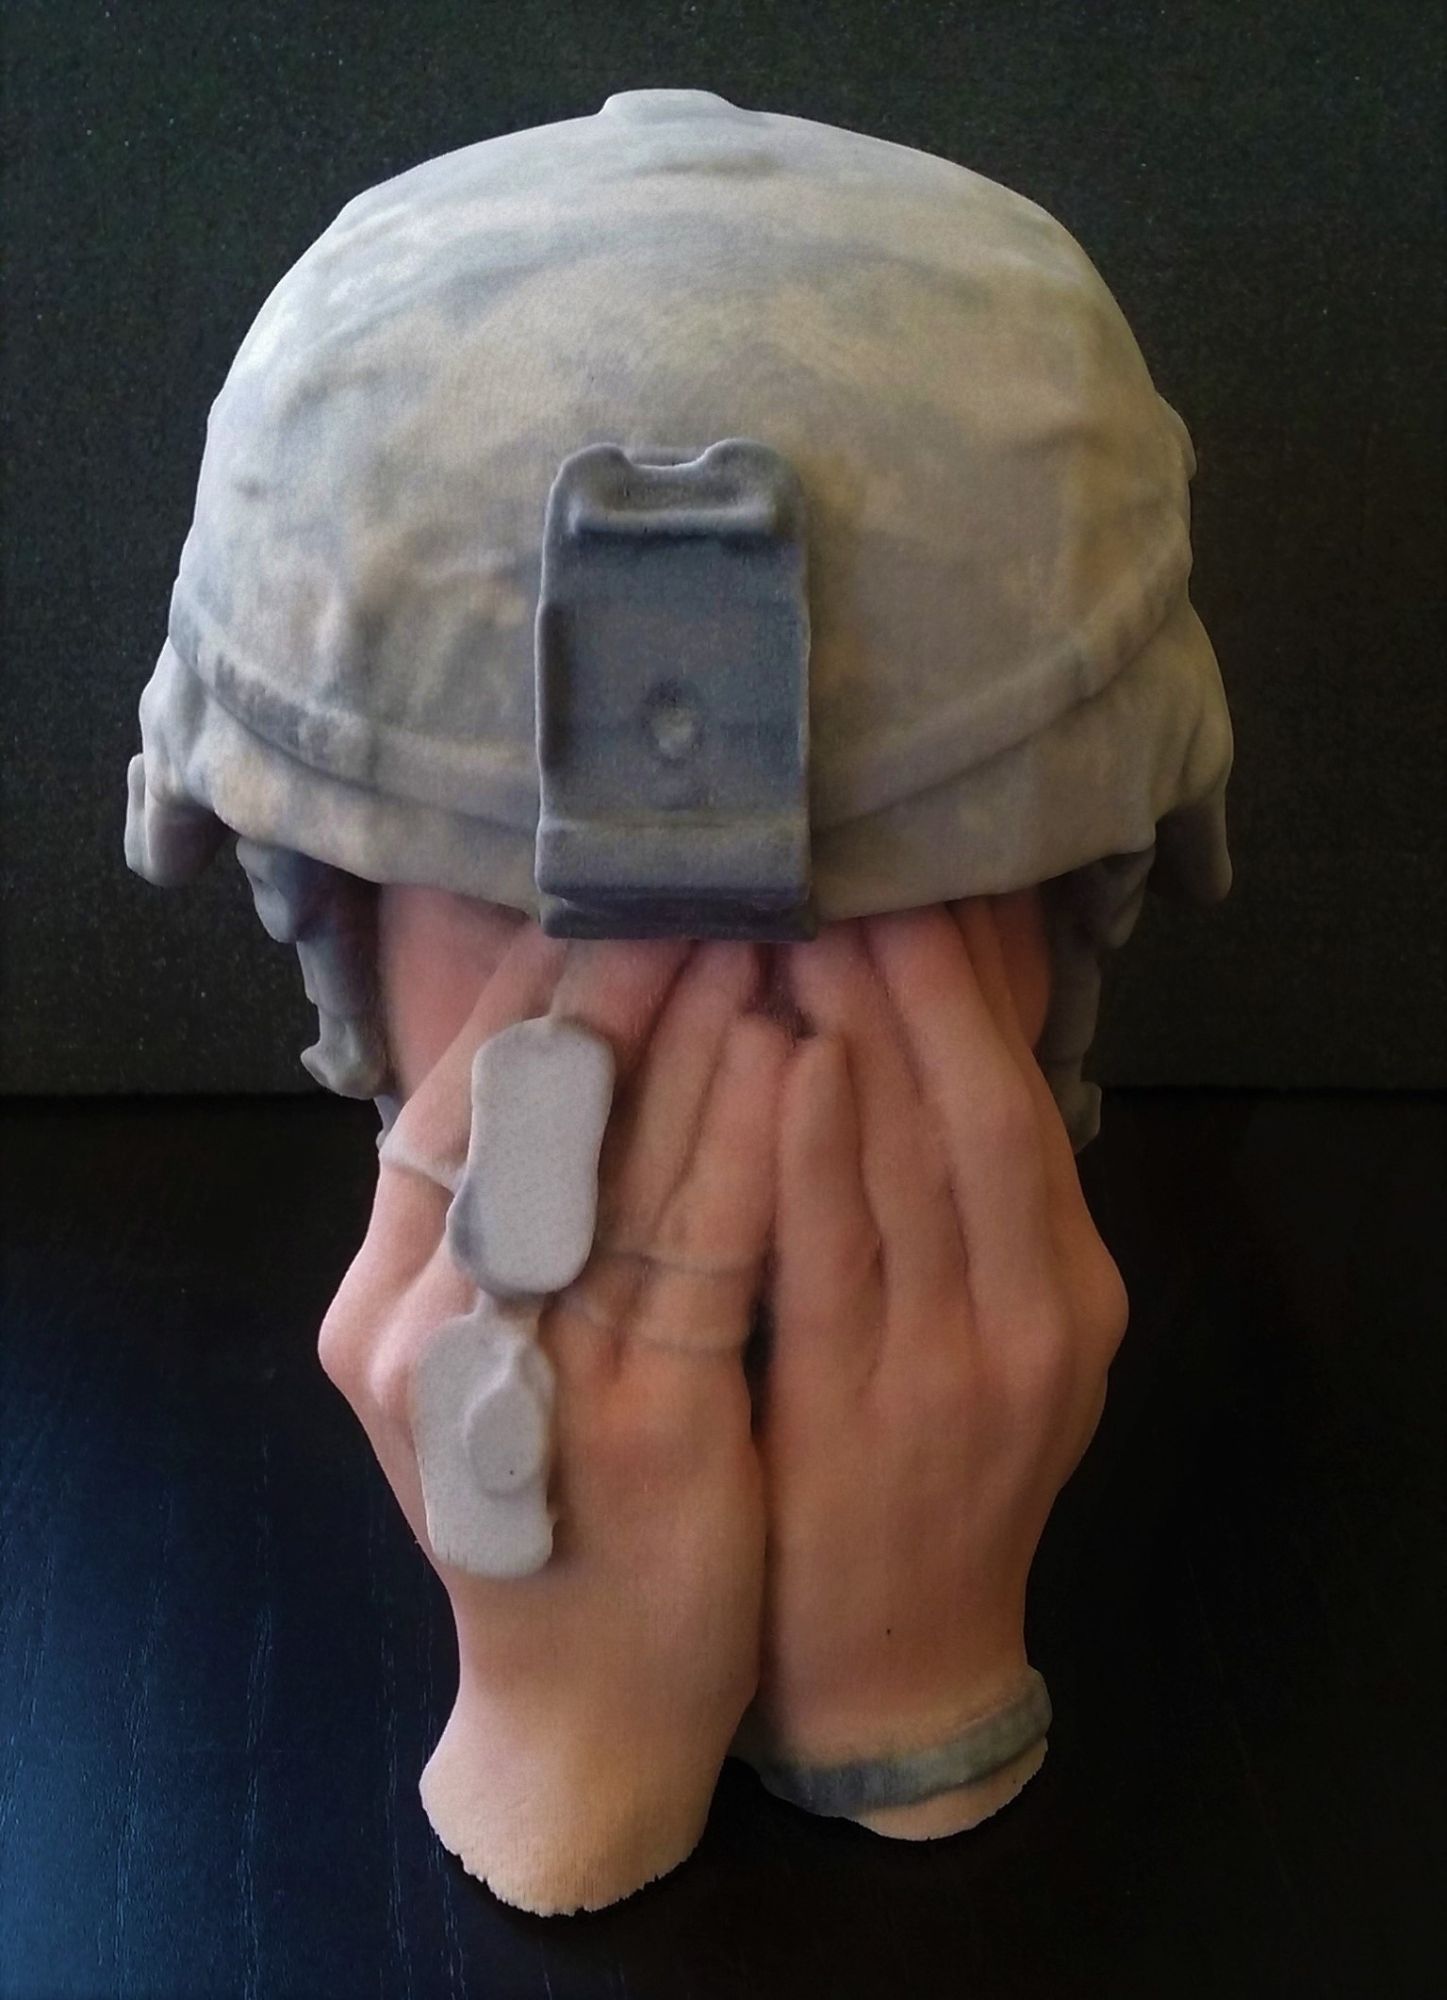 Combat Veteran with PTSD